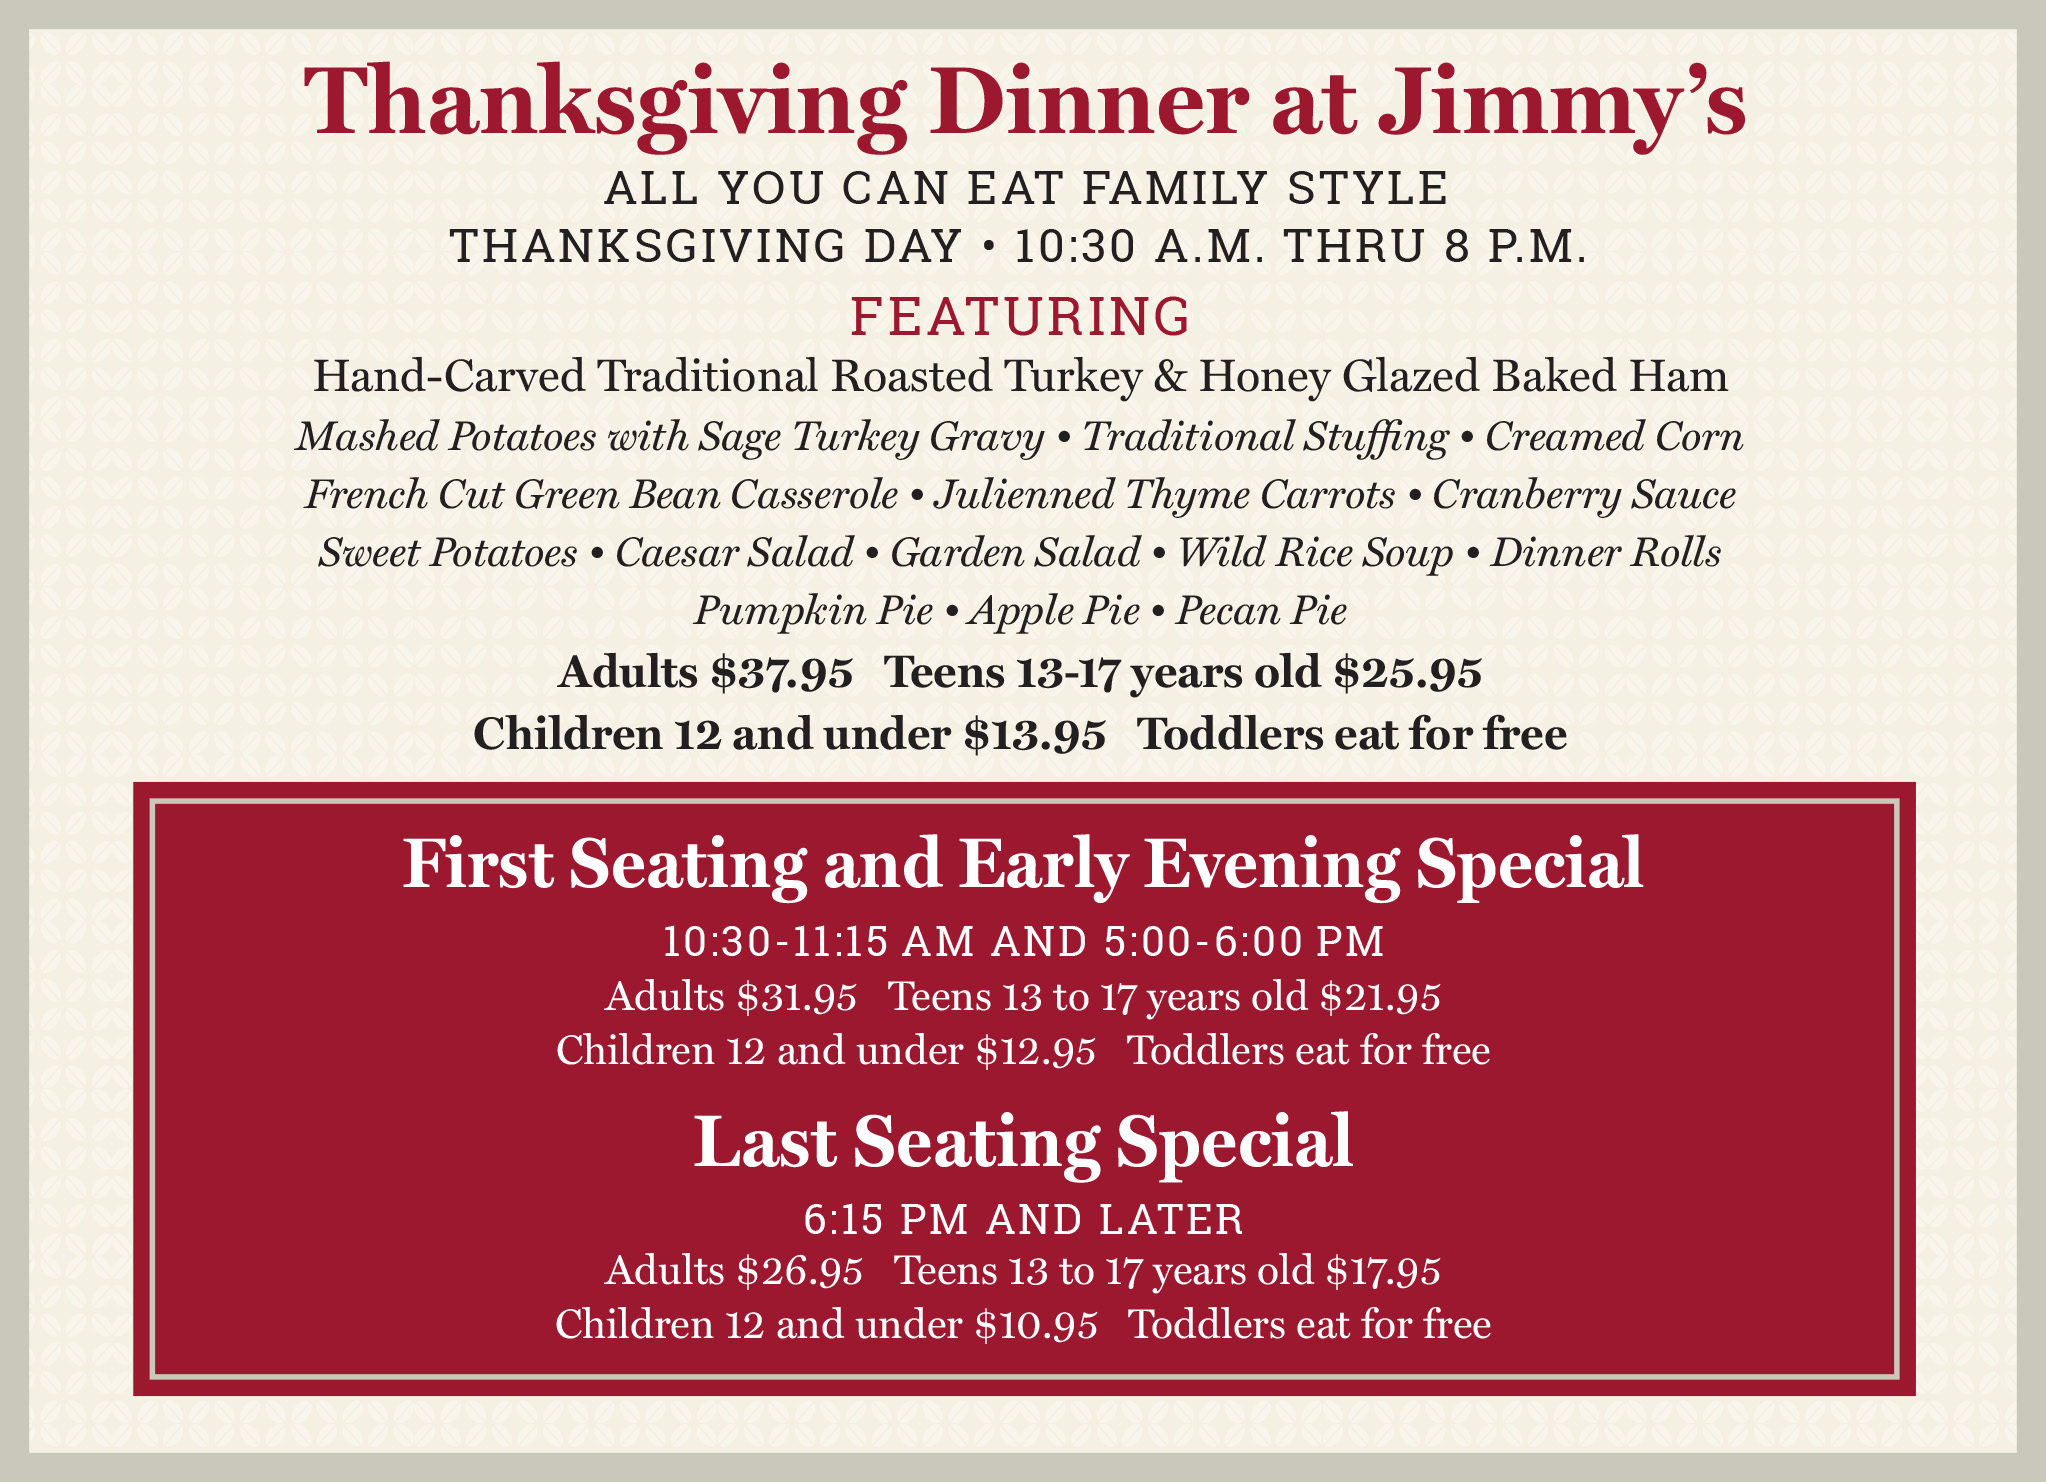 Jimmy's Thanksgiving Menu